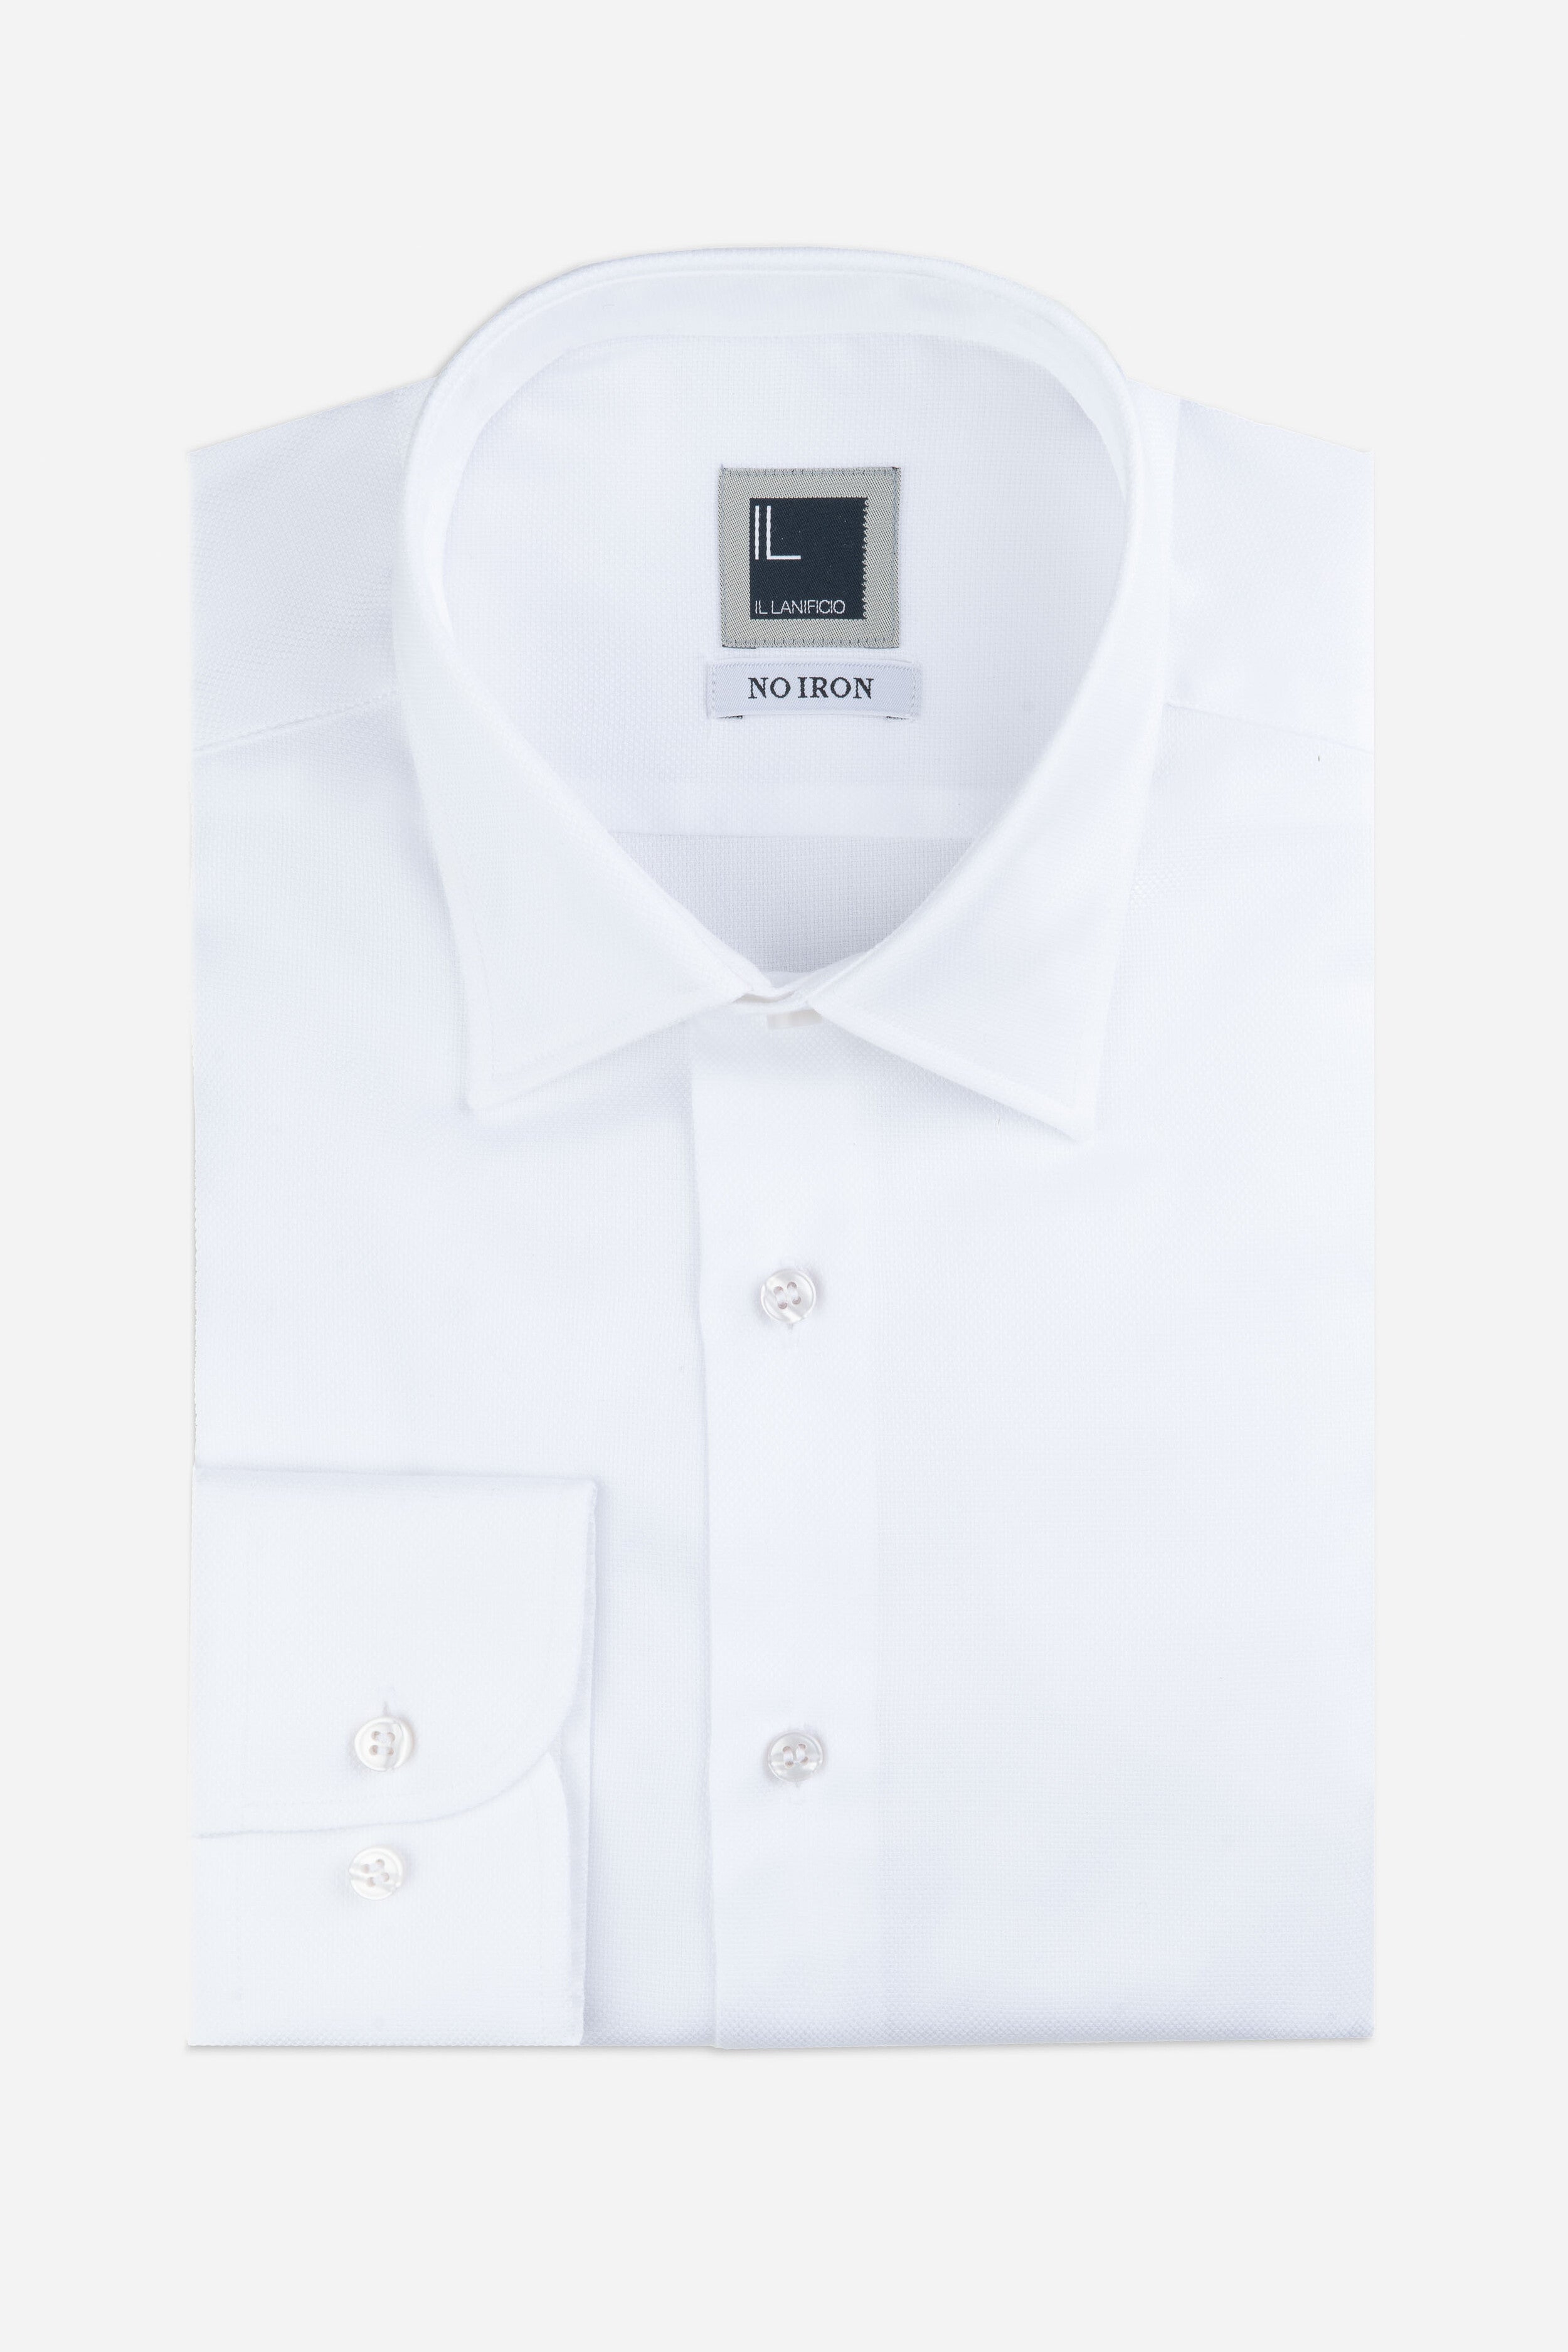 Camicia bianca no stiro - BIANCO